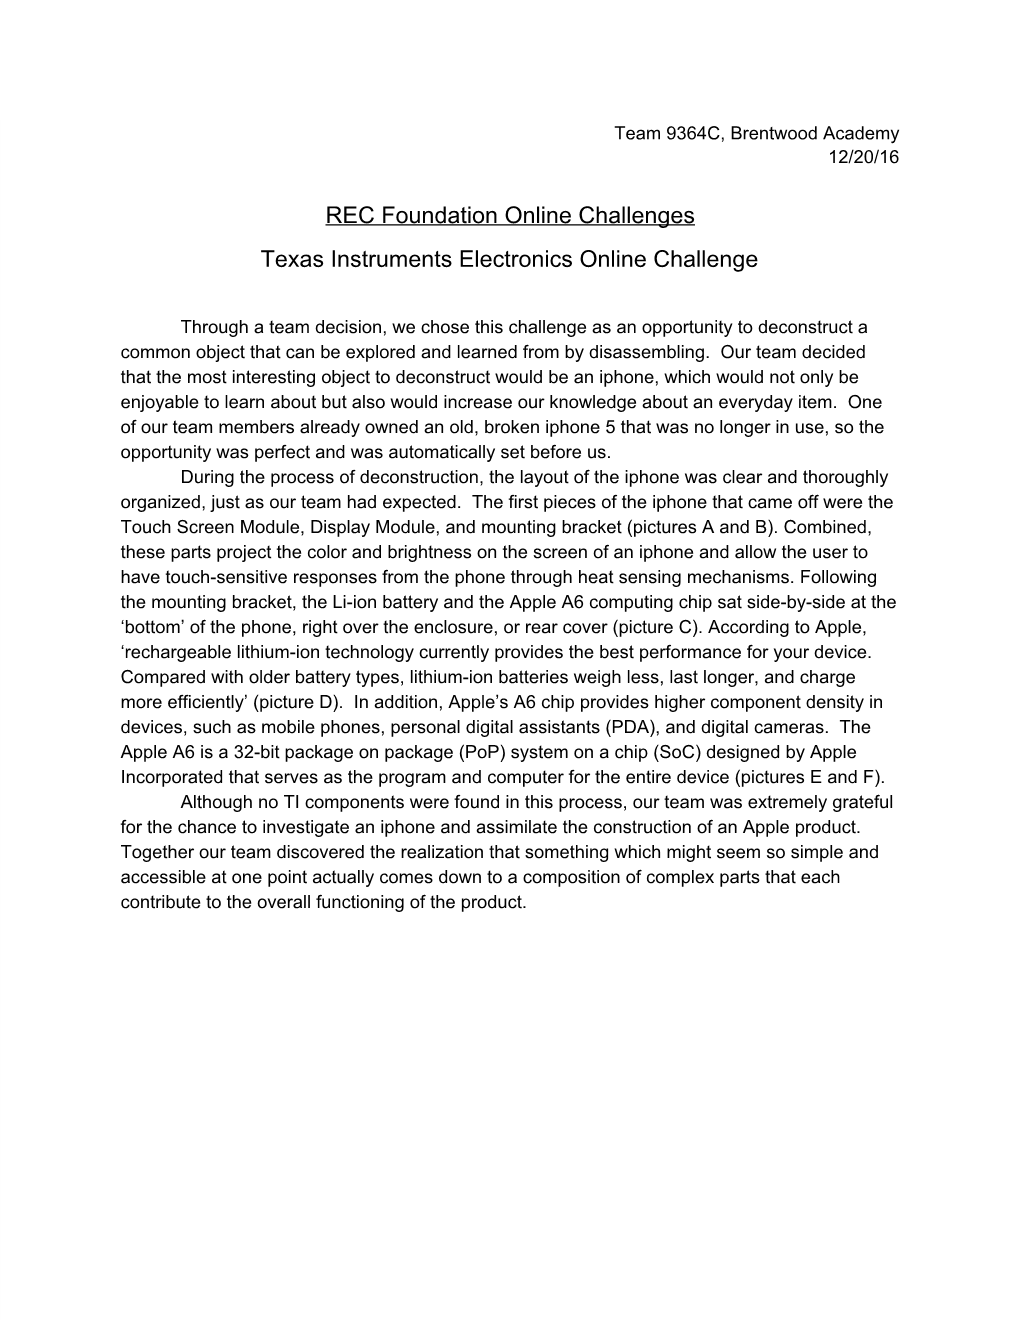 REC Foundation Online Challenges Texas Instruments Electronics Online Challenge